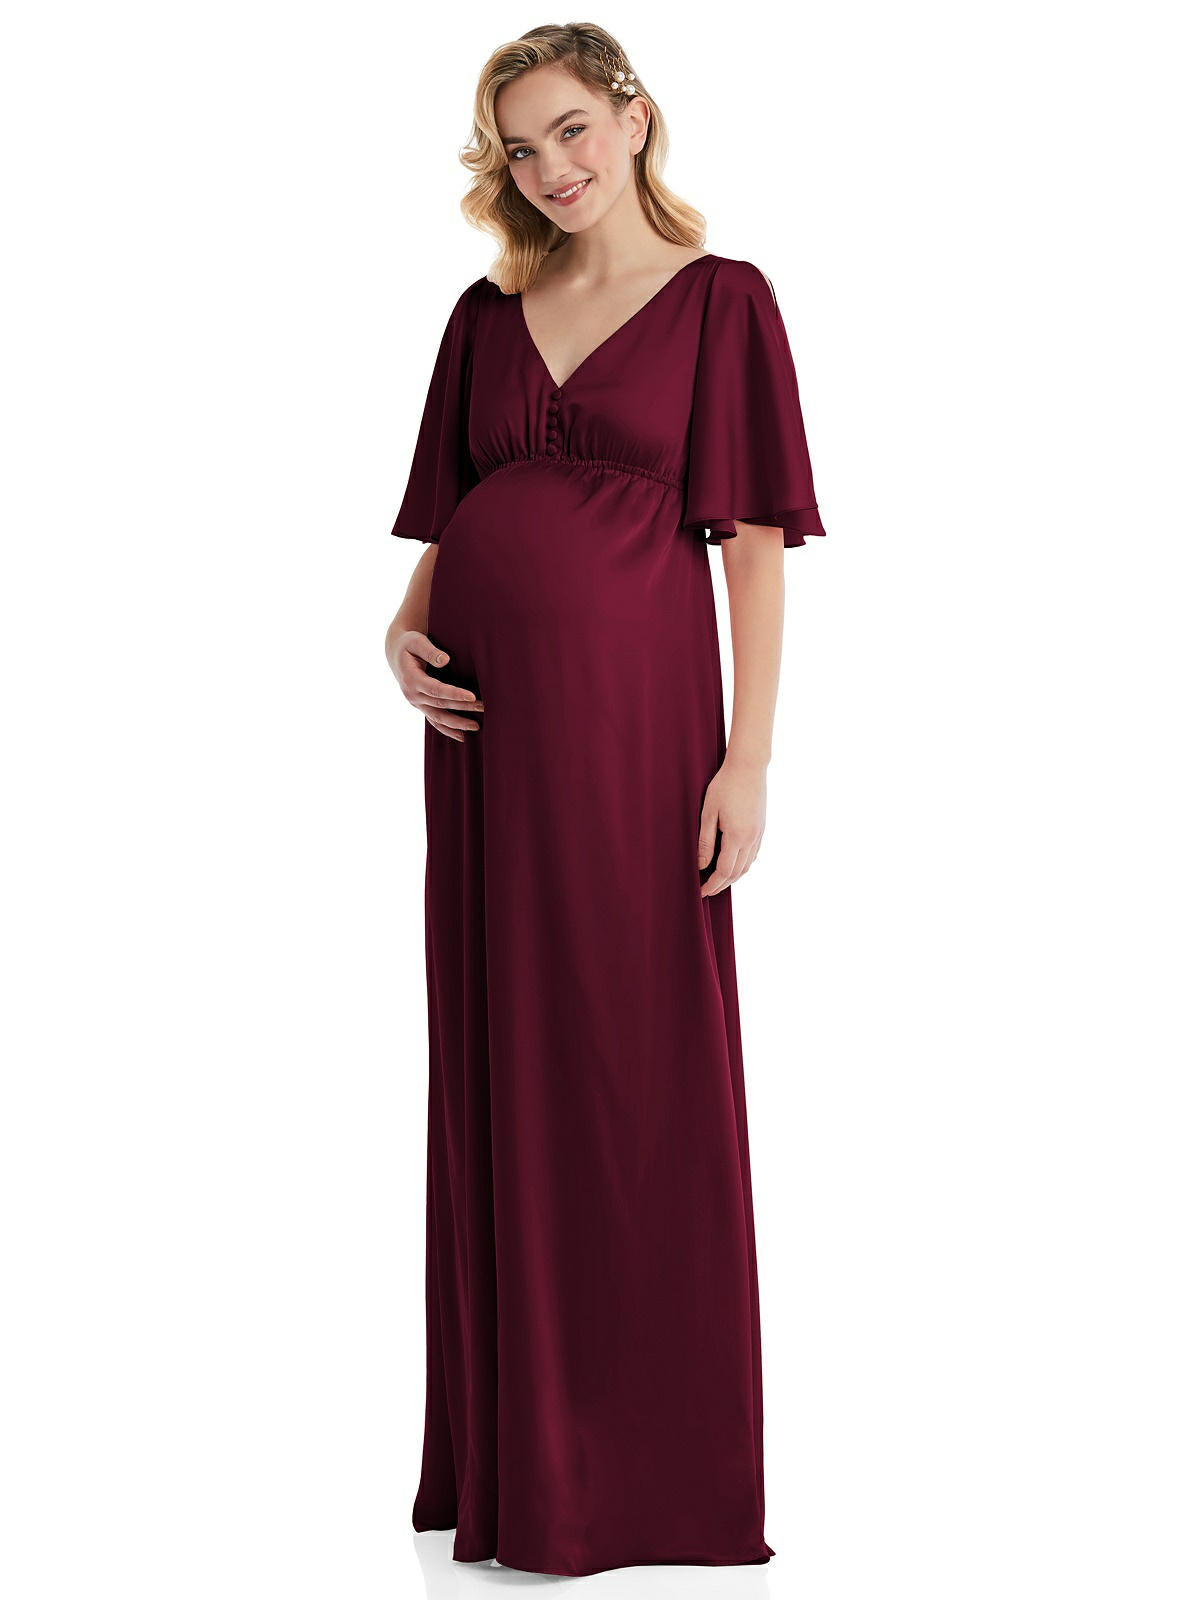 Bell Sleeves Maternity Dress for Baby Shower